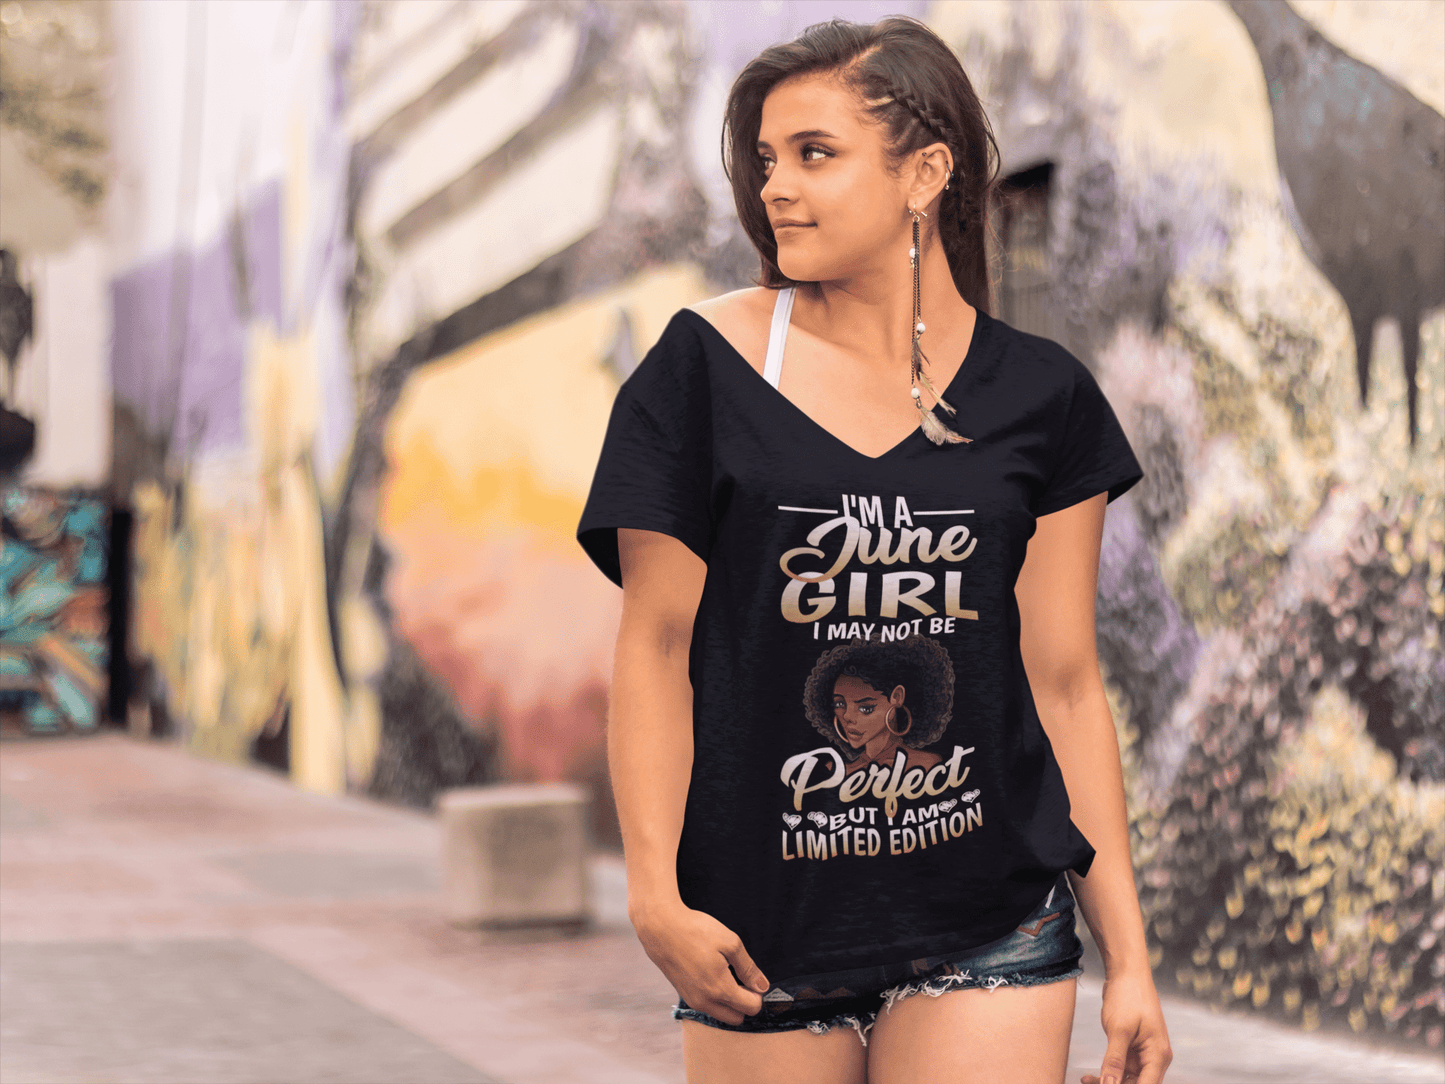 ULTRABASIC Women's T-Shirt June Girl - Limited Edition Birthday Gifts Novelty